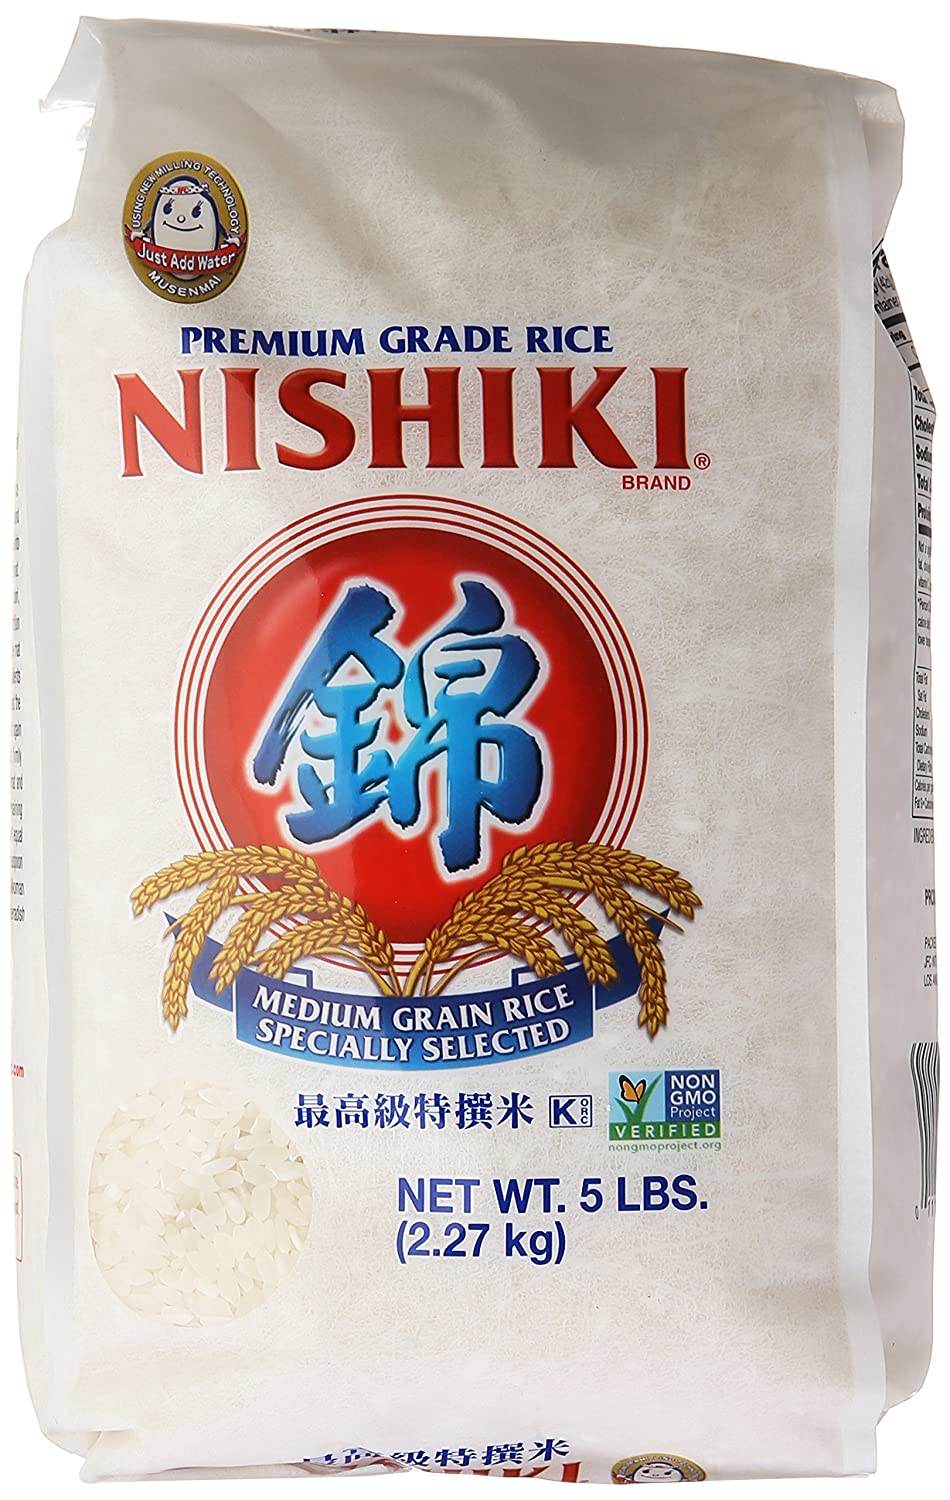 Nishiki Medium Grain Premium Rice, 80 Ounce @Amazon (S&S) $5.2